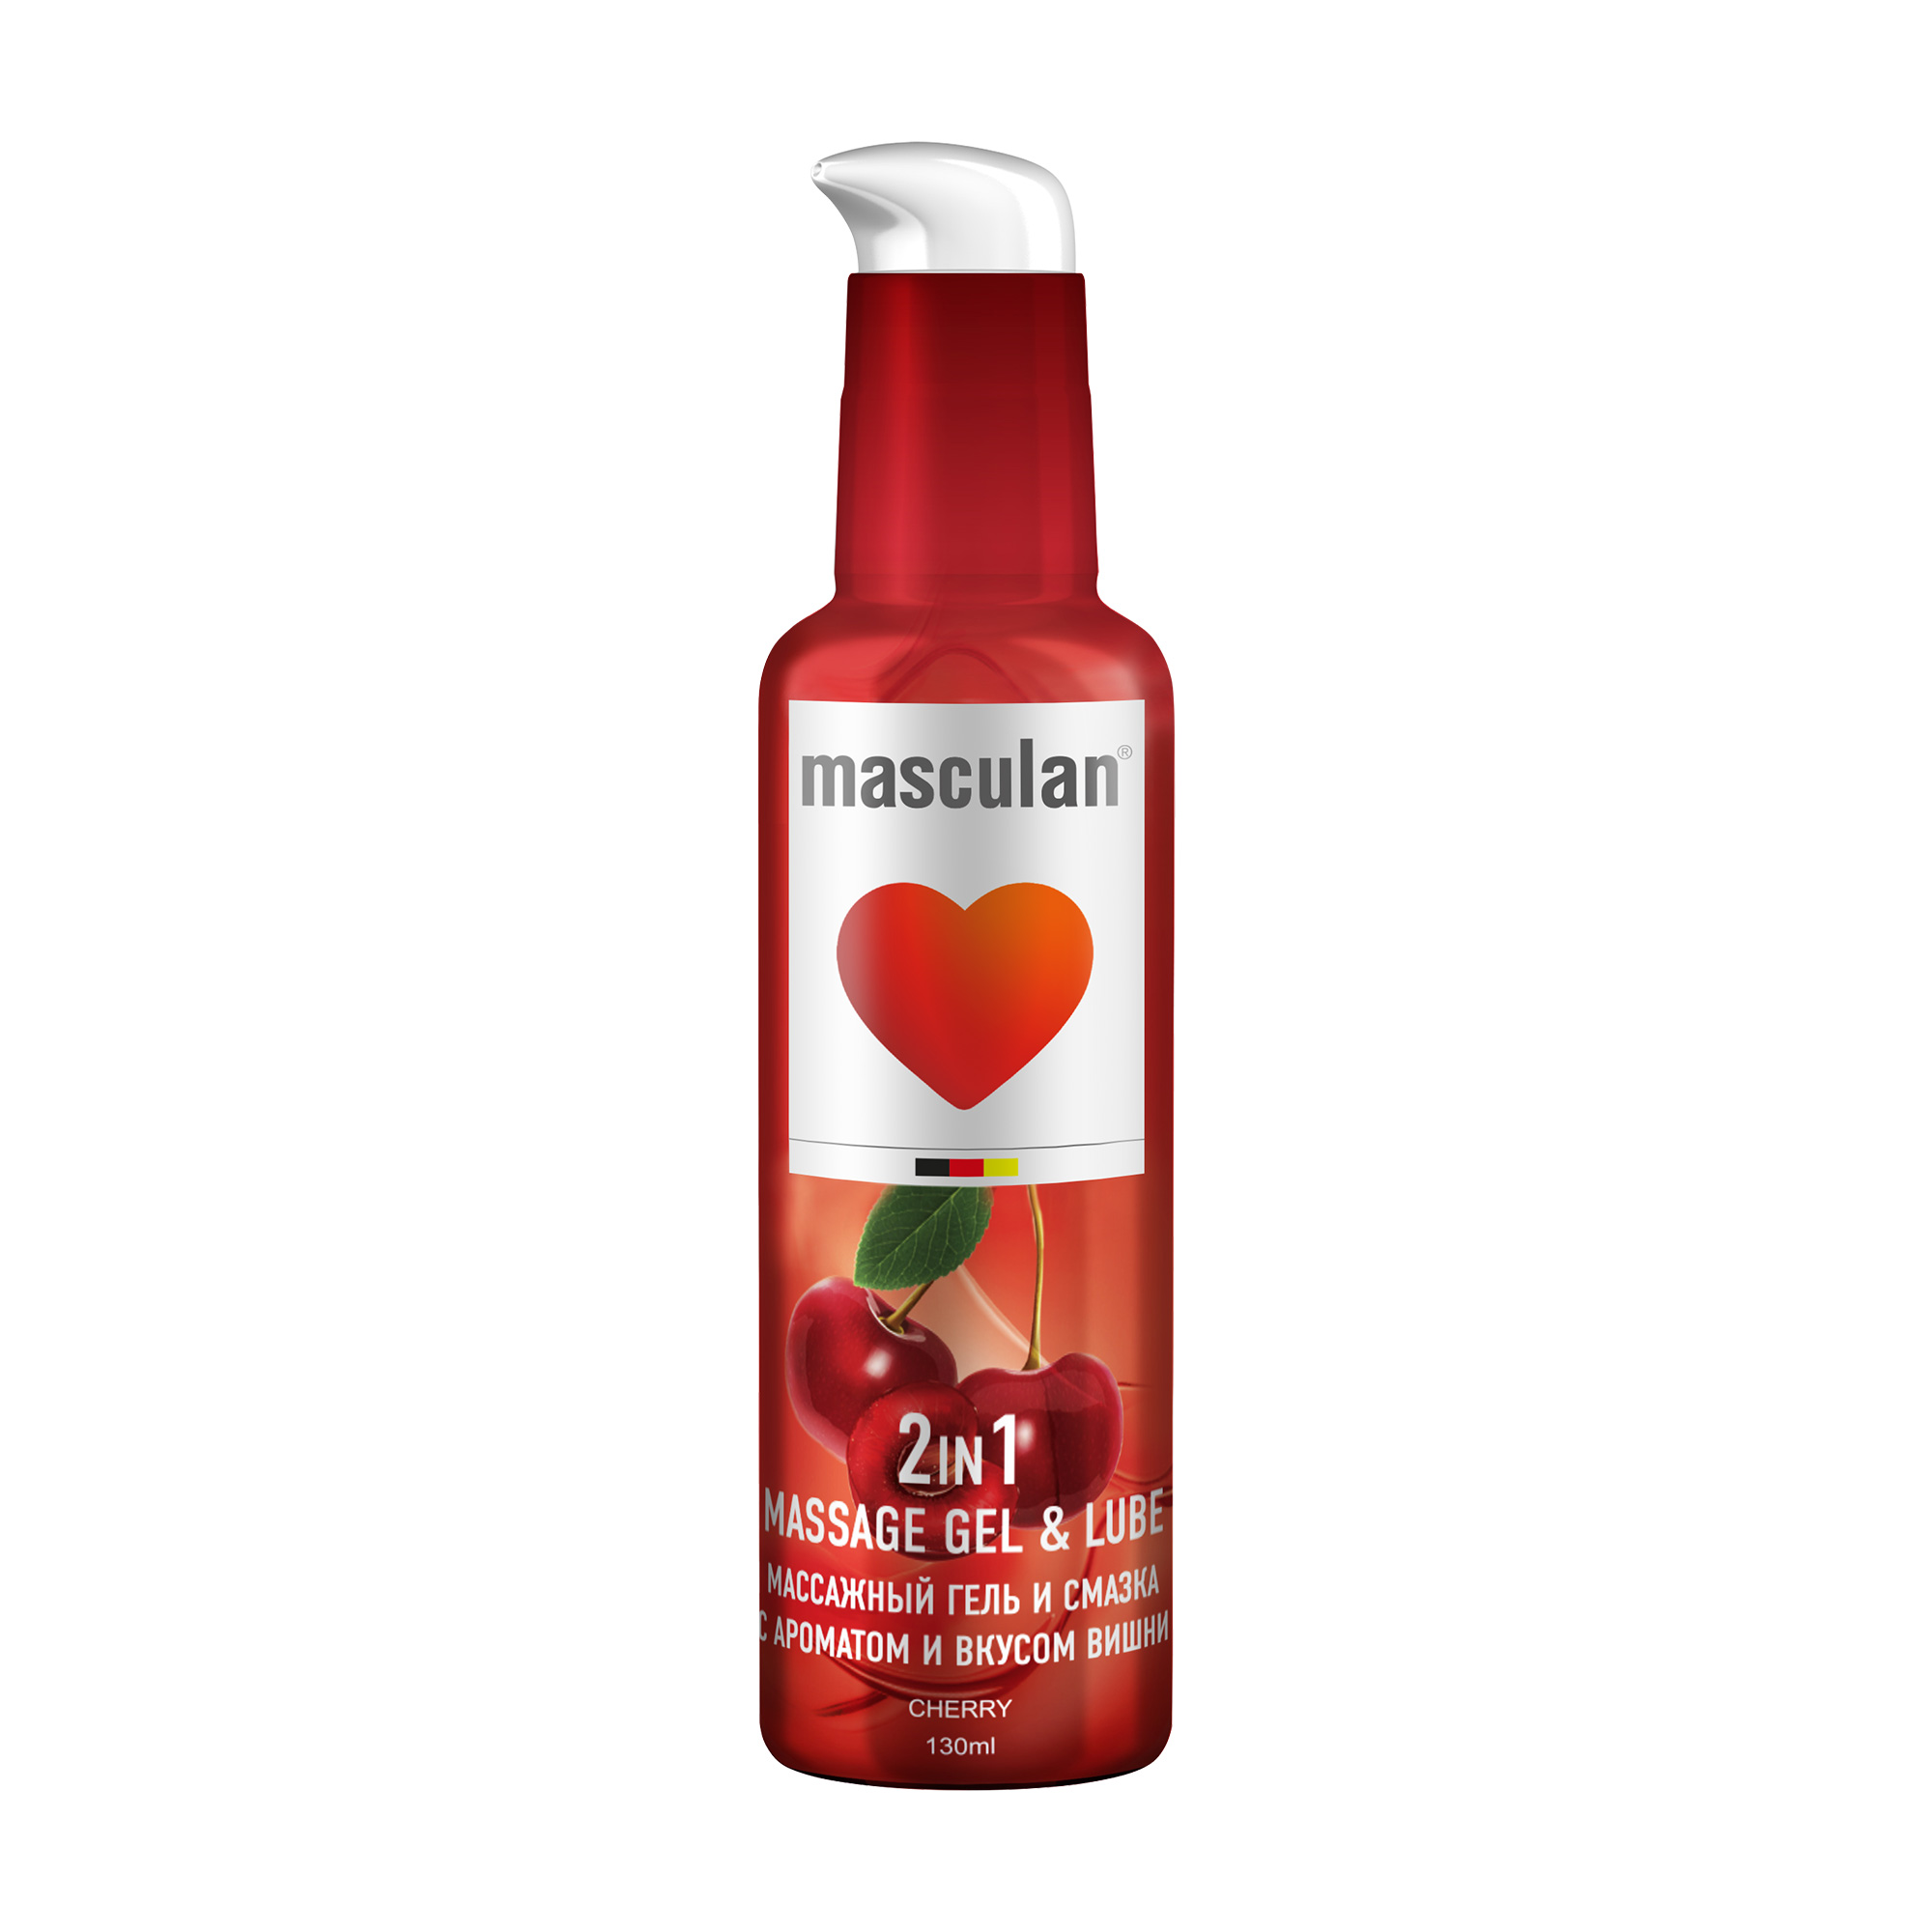 Massage Gel & Lube Cherry - С ароматом и вкусом вишни, 2 в 1